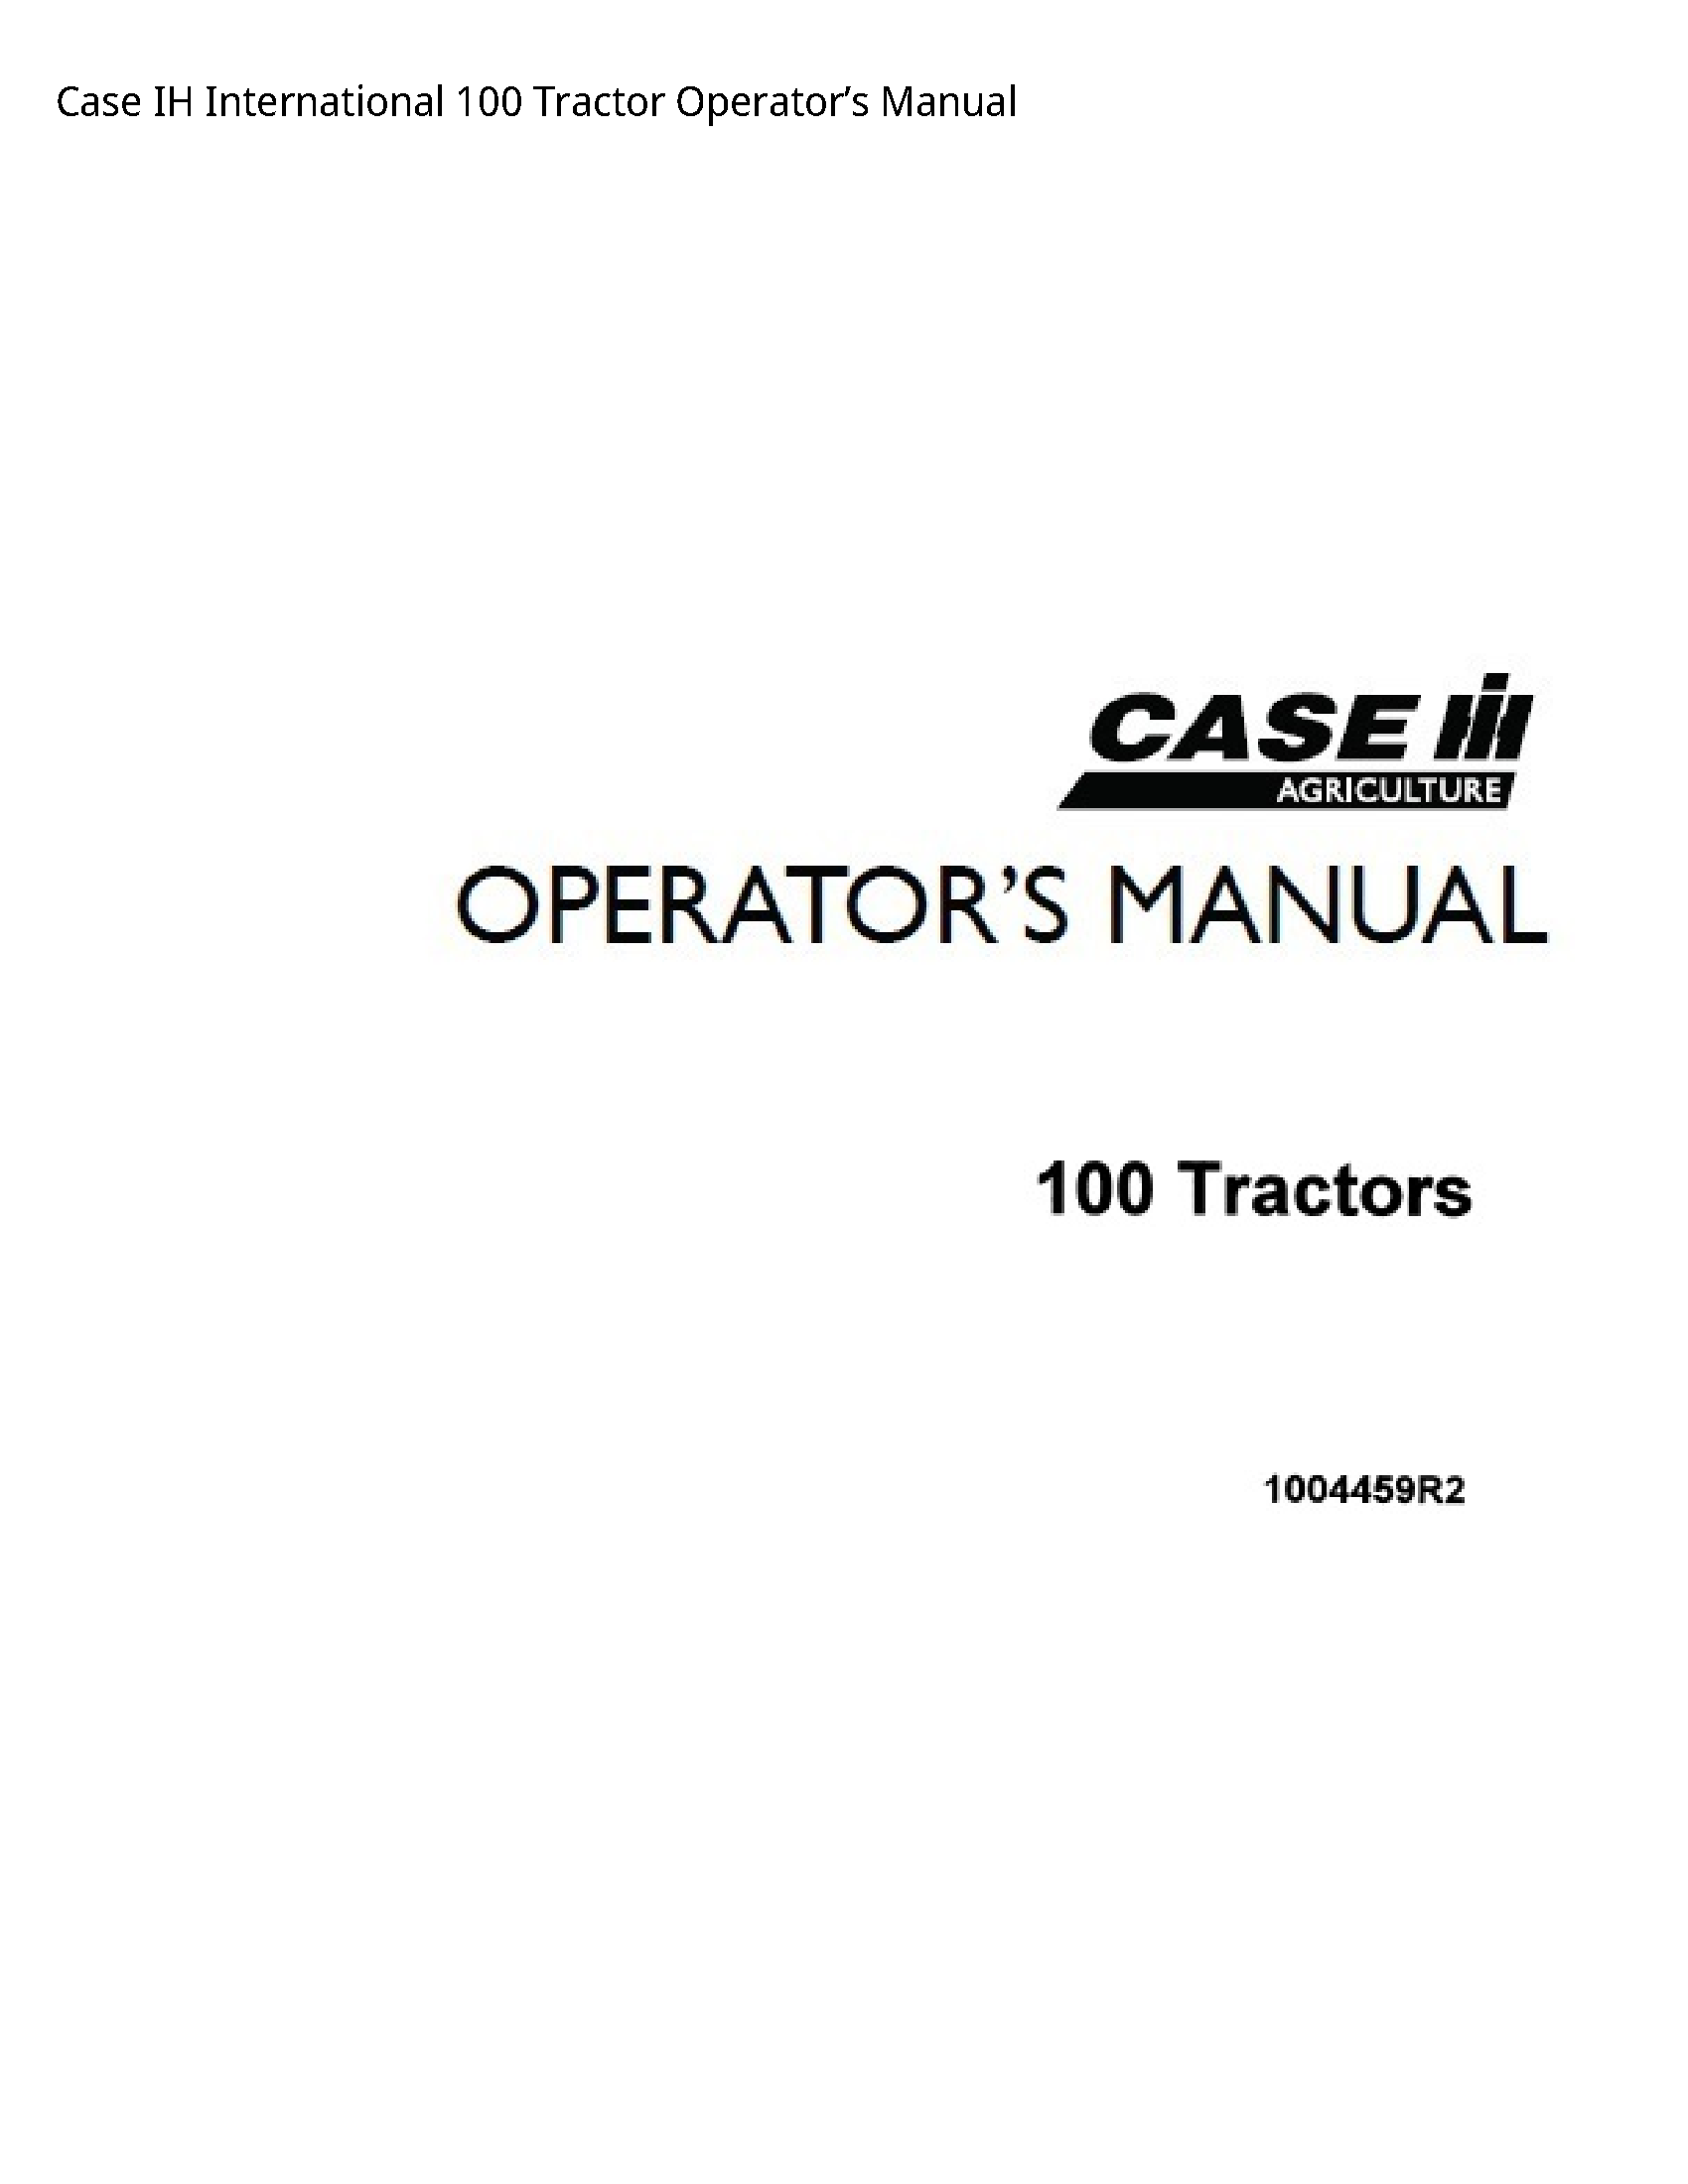 Case/Case IH 100 IH International Tractor Operator’s manual